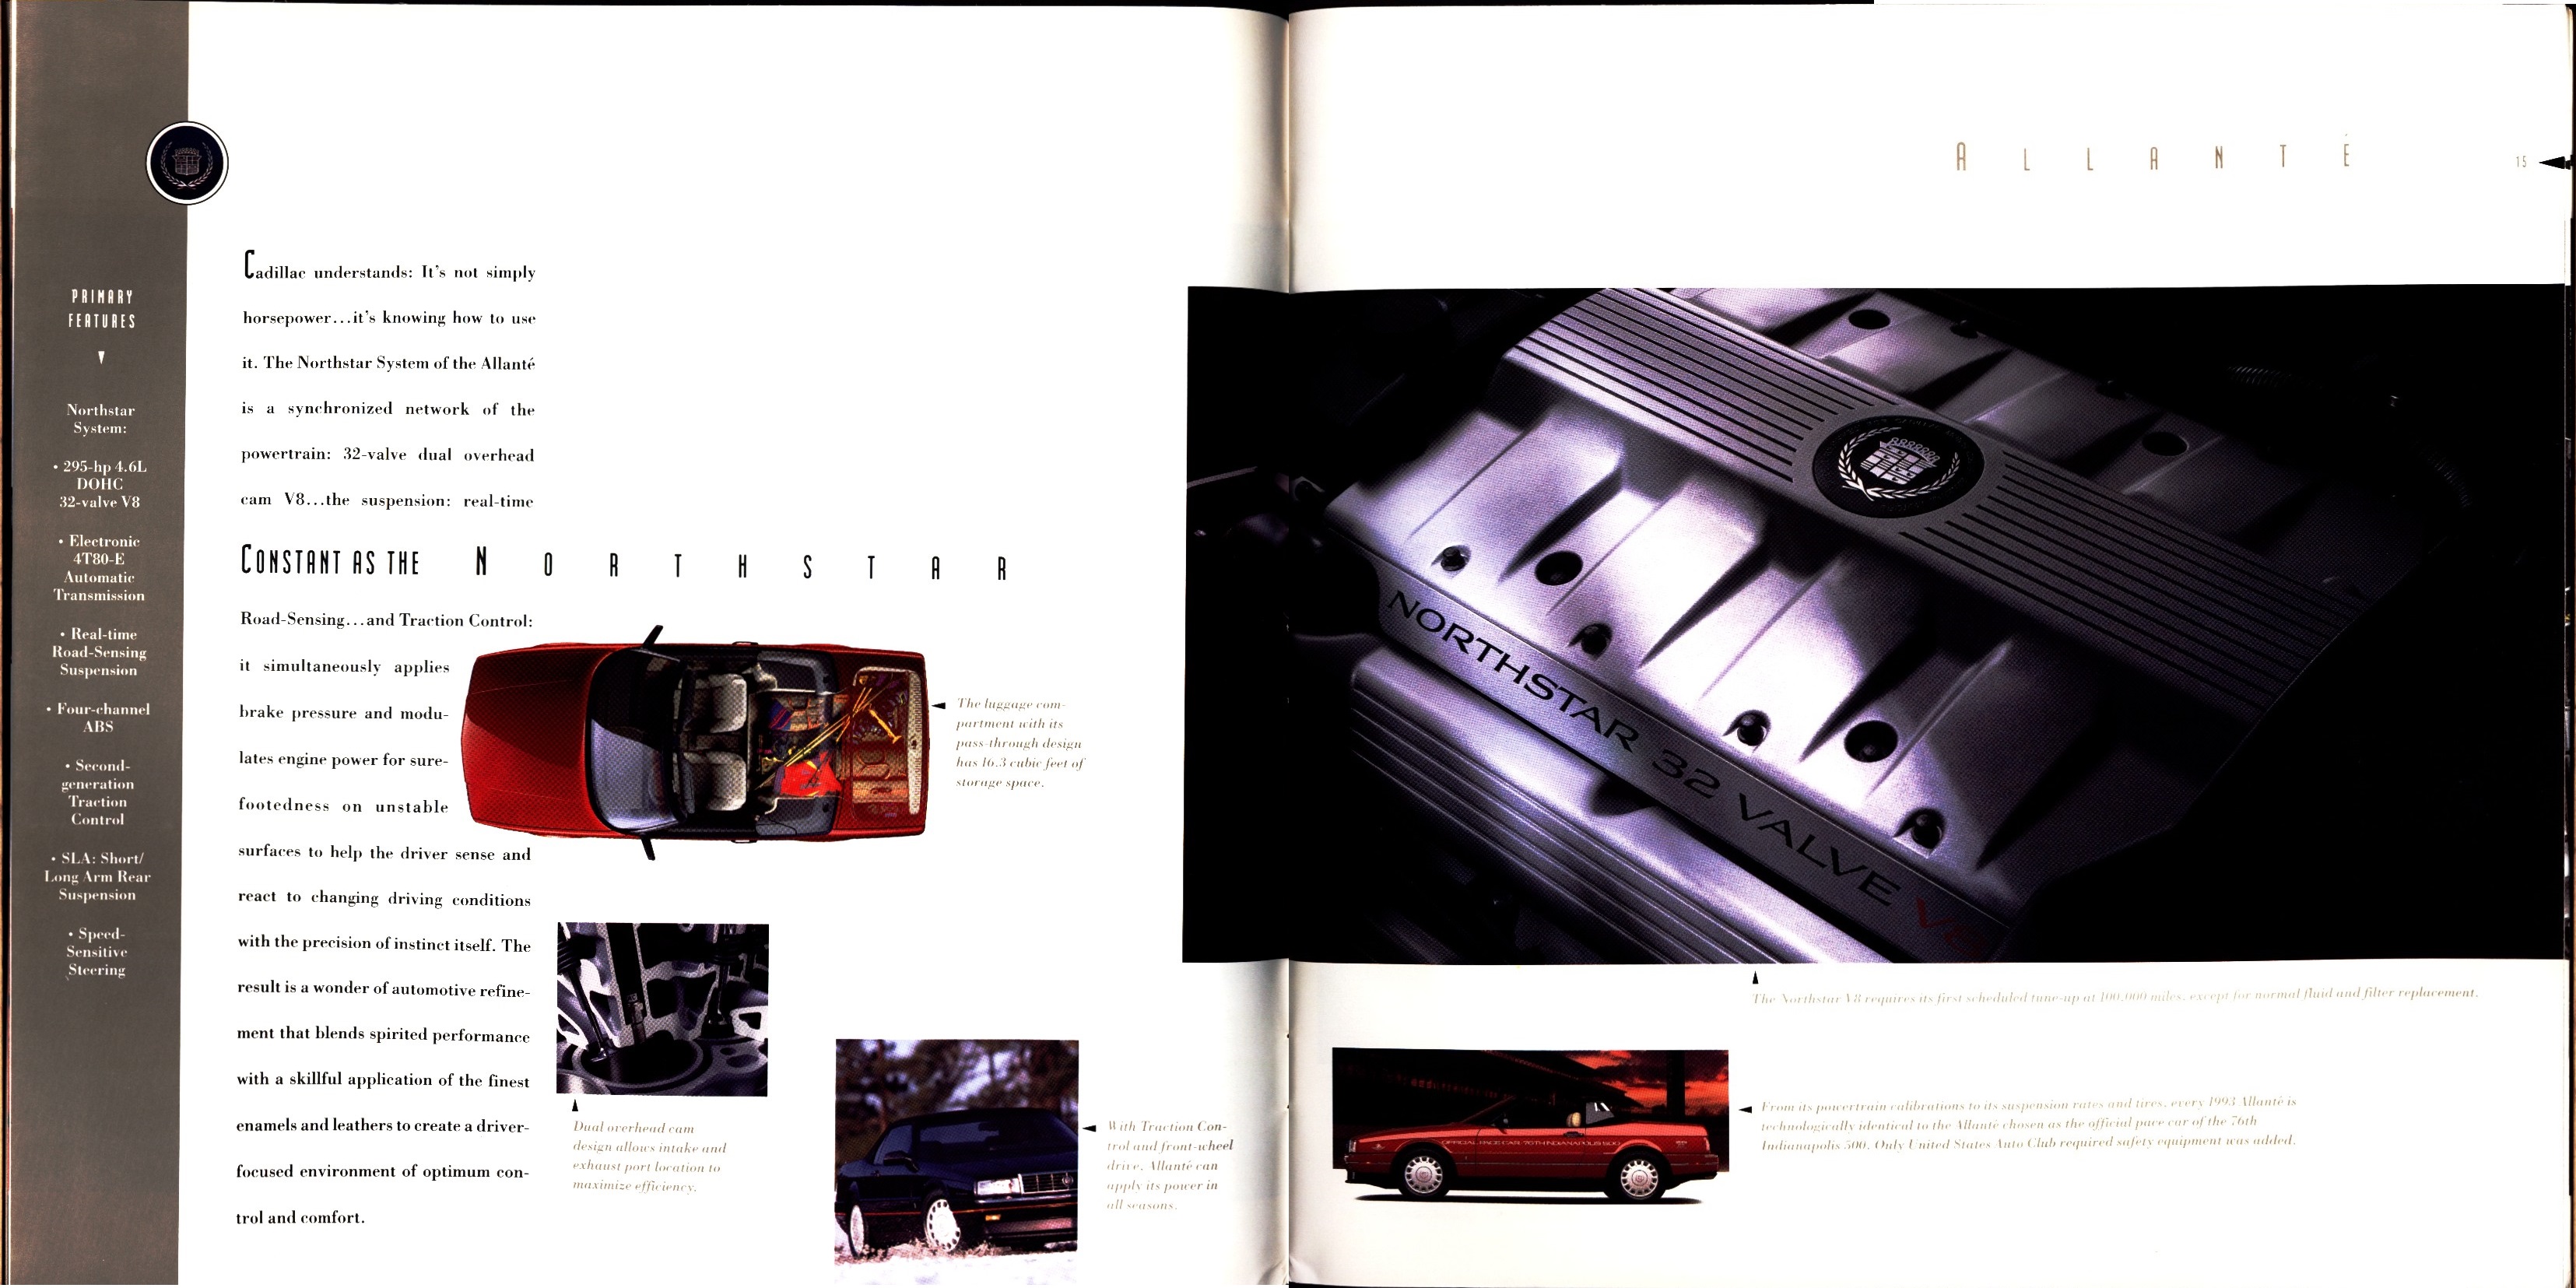 1993 Cadillac Full Line Prestige Brochure 14-15